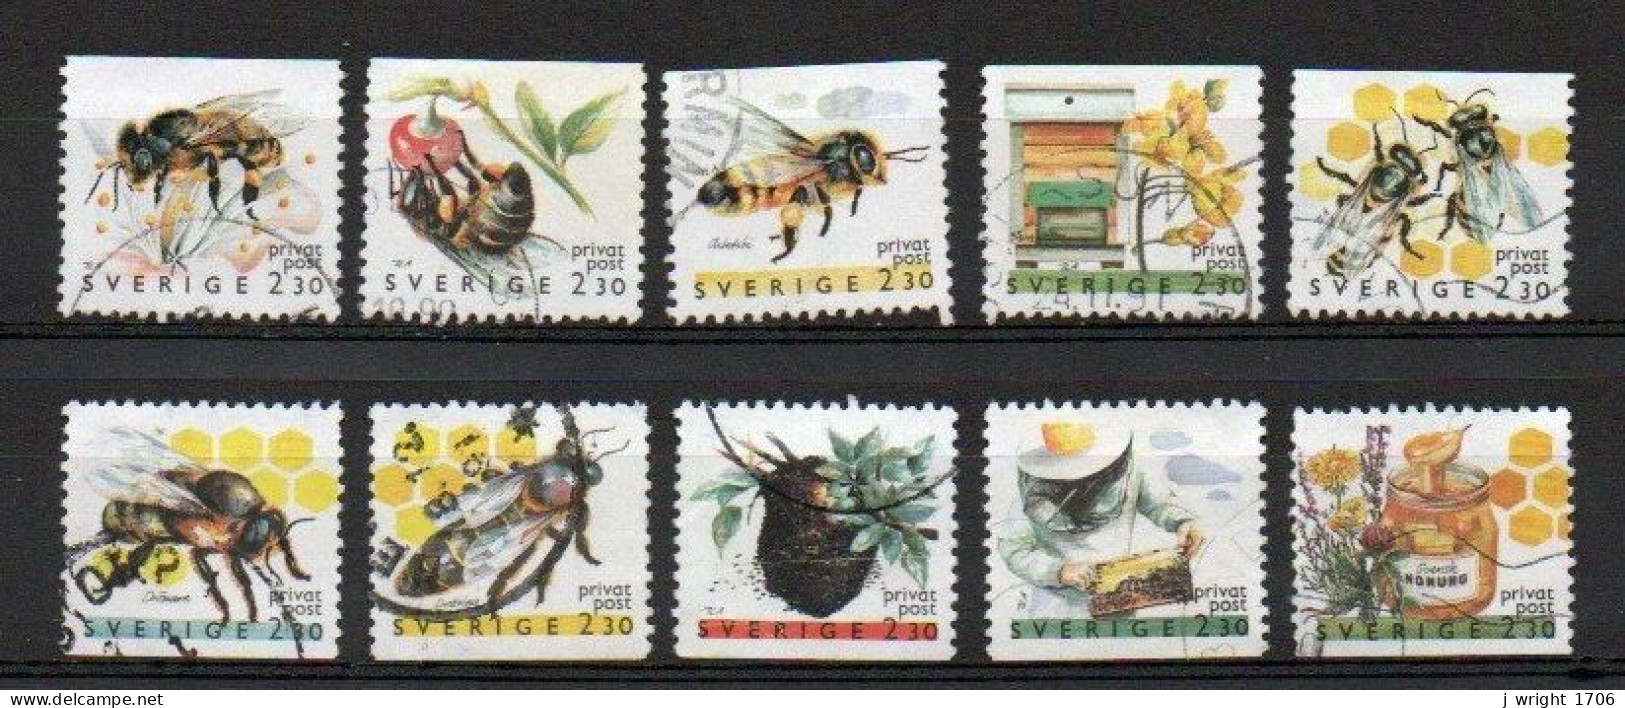 Sweden, 1990, Rebate Stamps/Honey Bees, Set, USED - Gebruikt